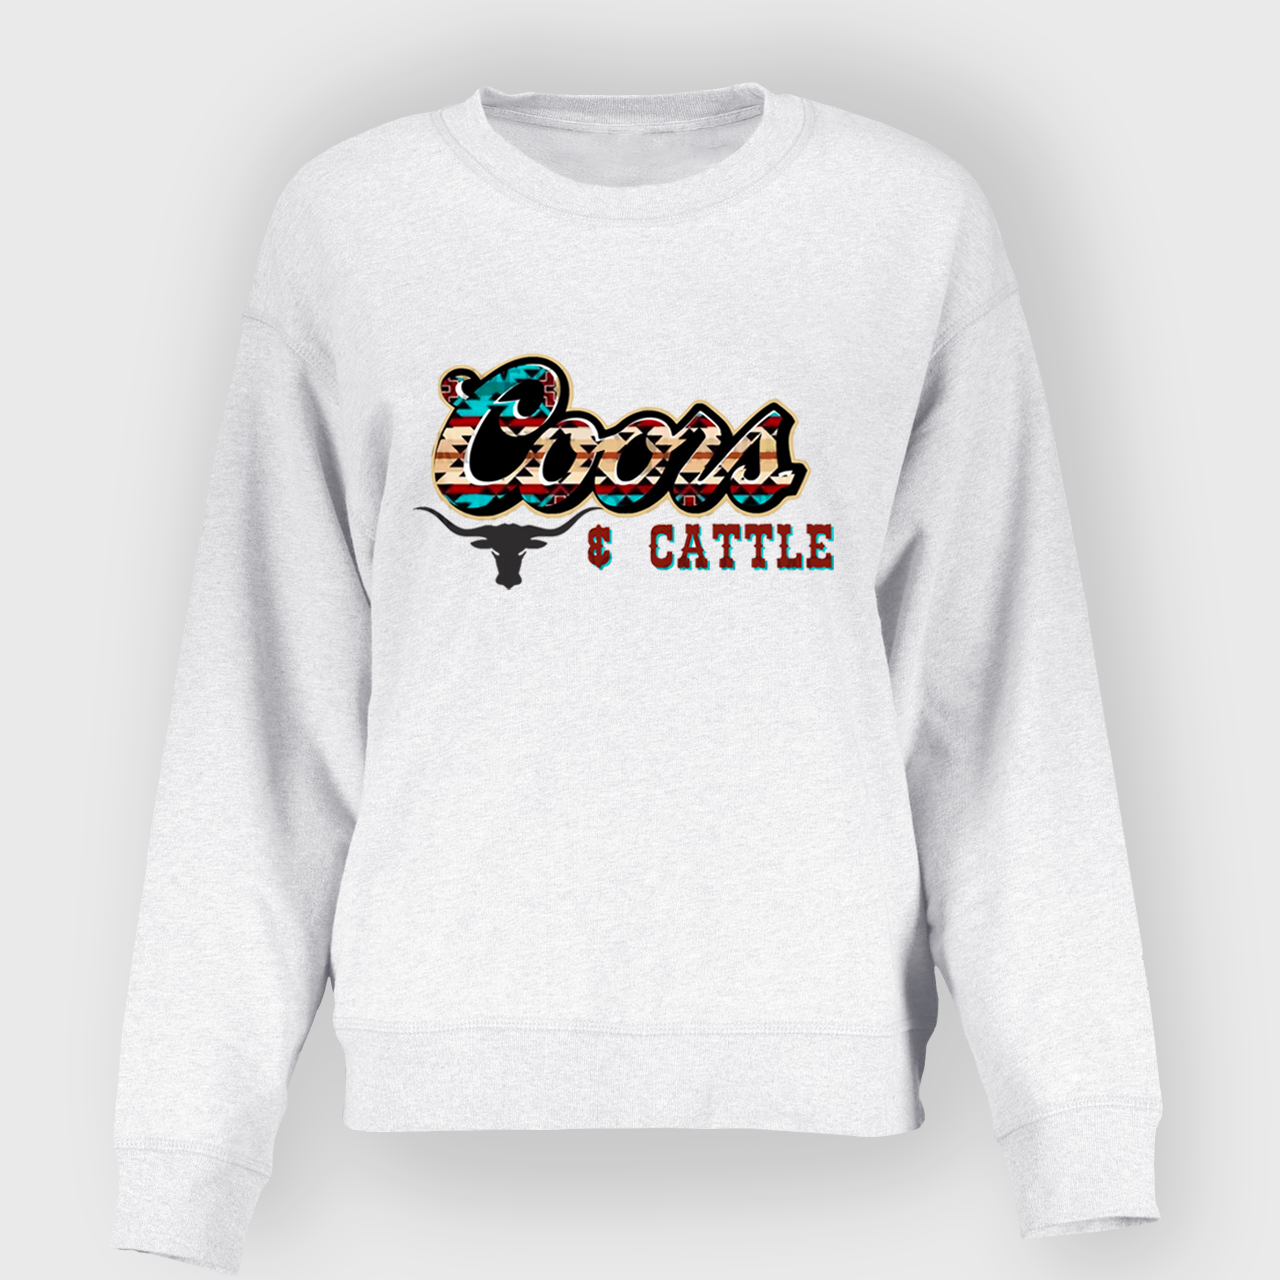 Coors $ Cattle Cow Skull Sweatshirt